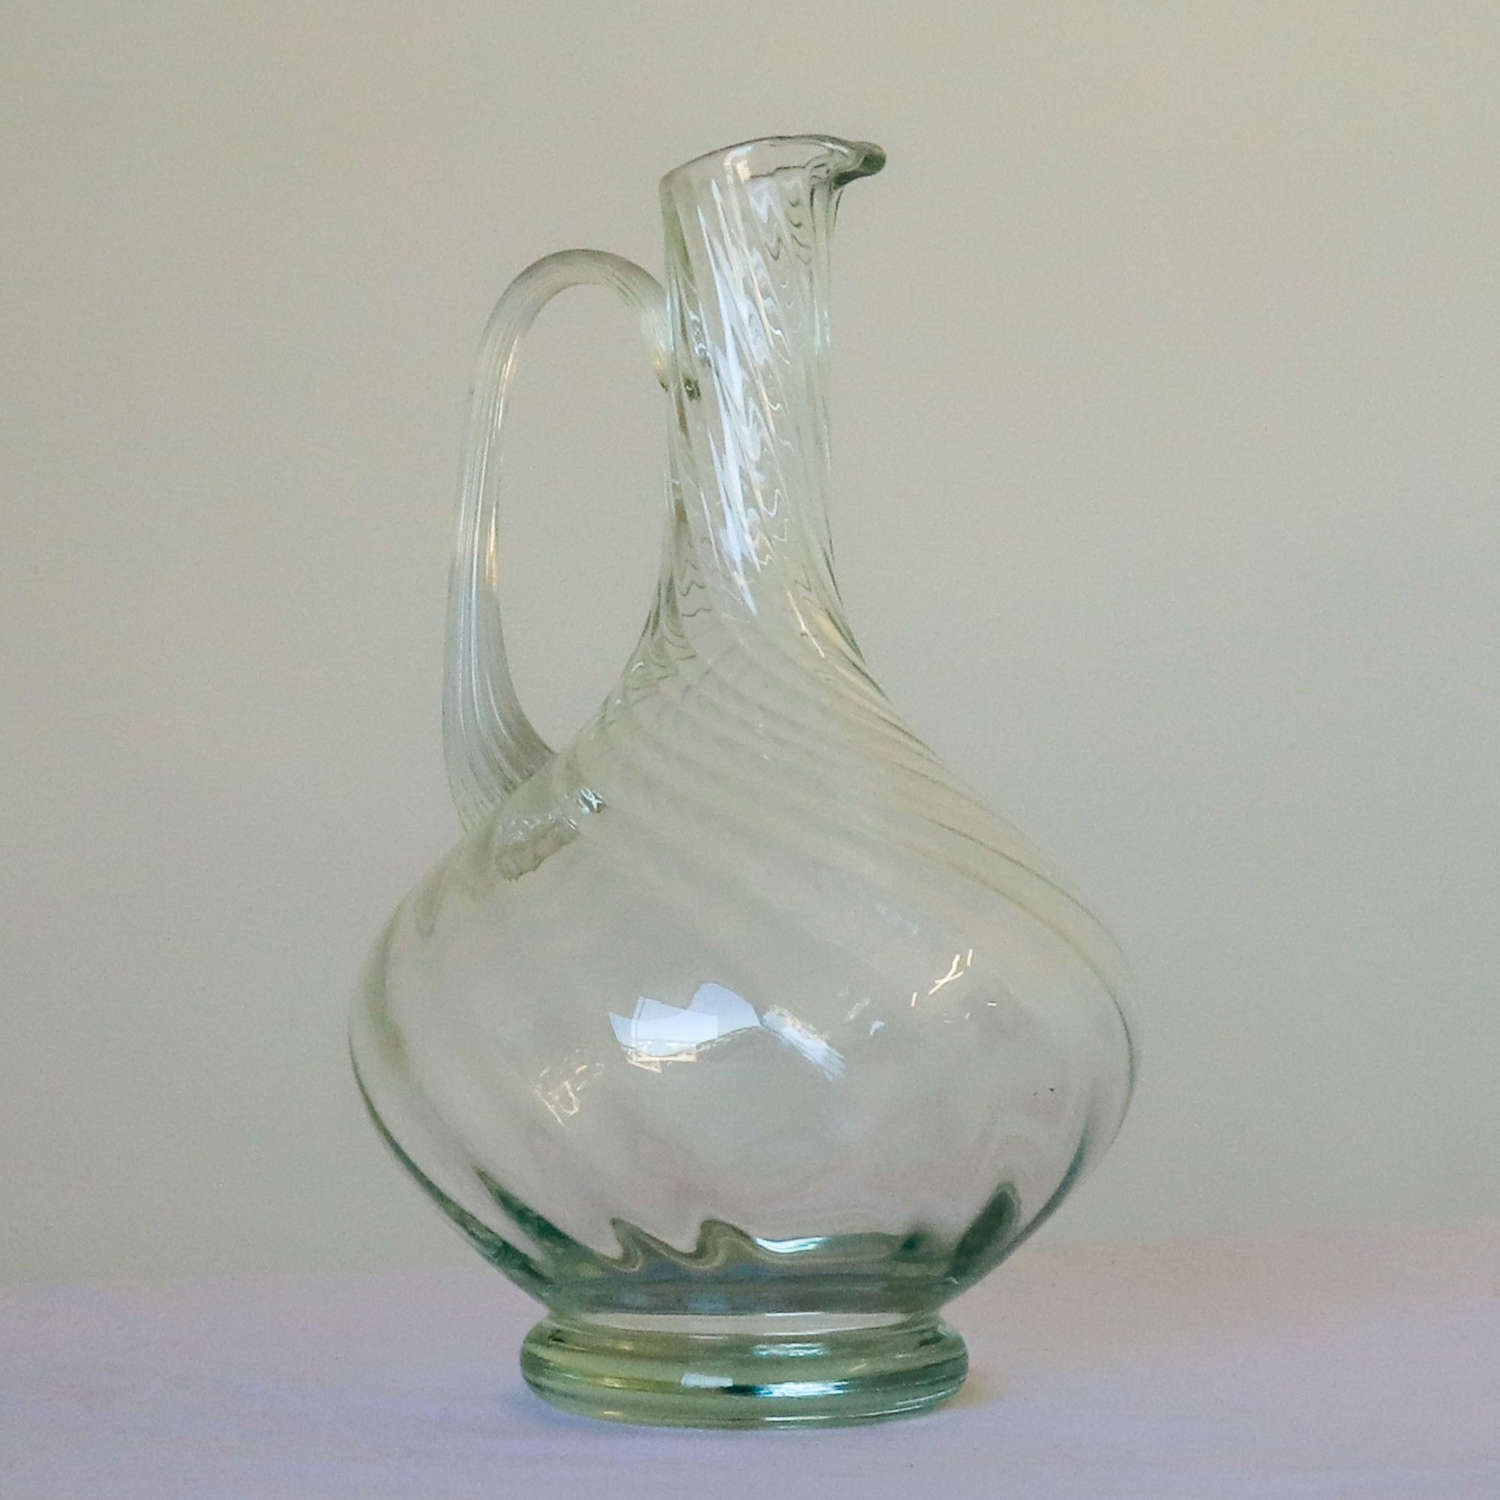 Vintage mid century glass pitcher